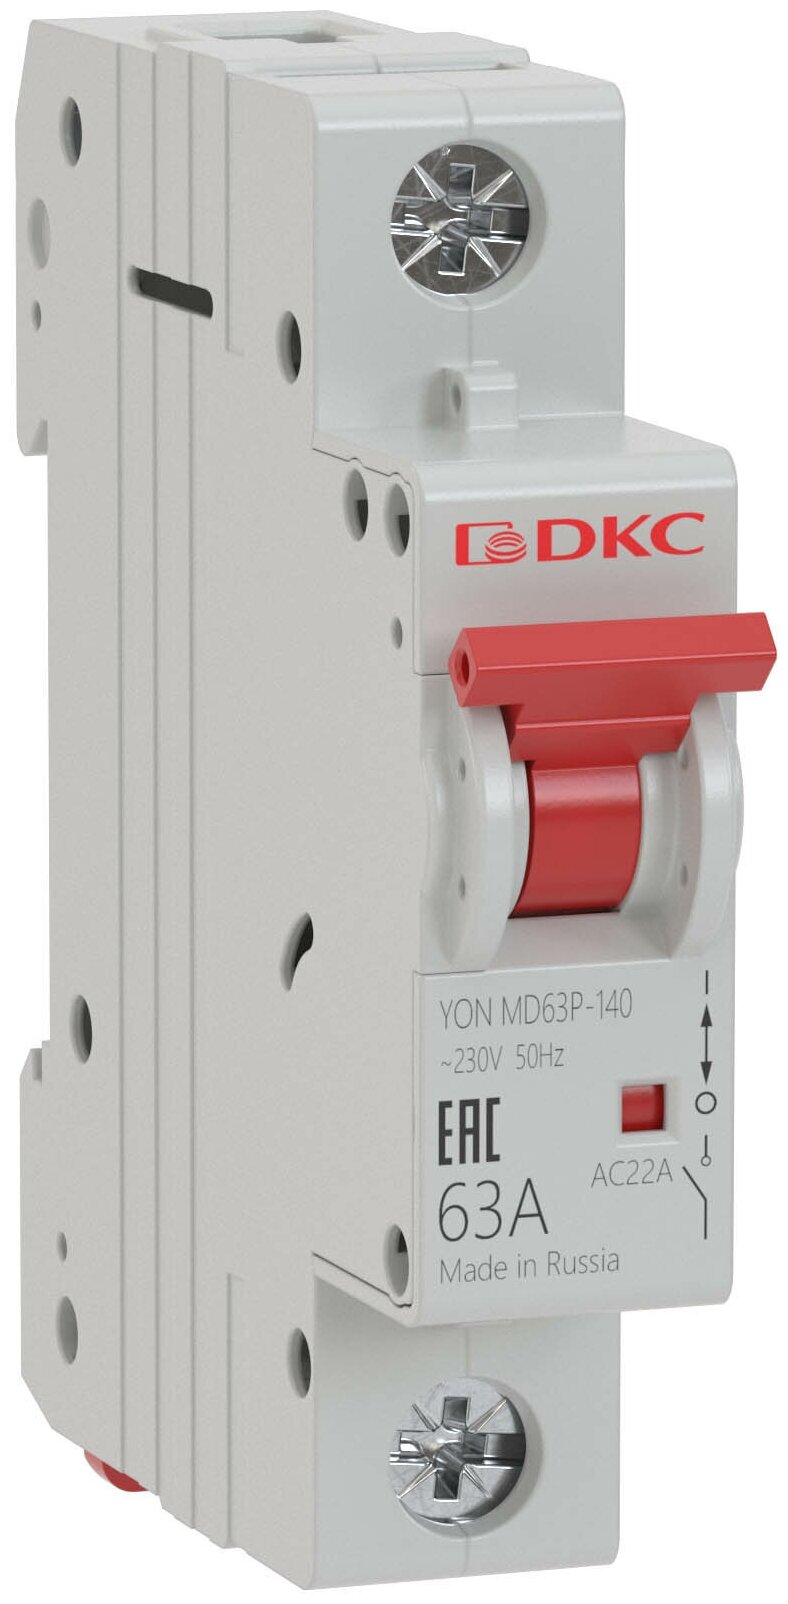 DKC Выключатель нагрузки модульный YON MD63P-163, DKC, арт. MD63P-163